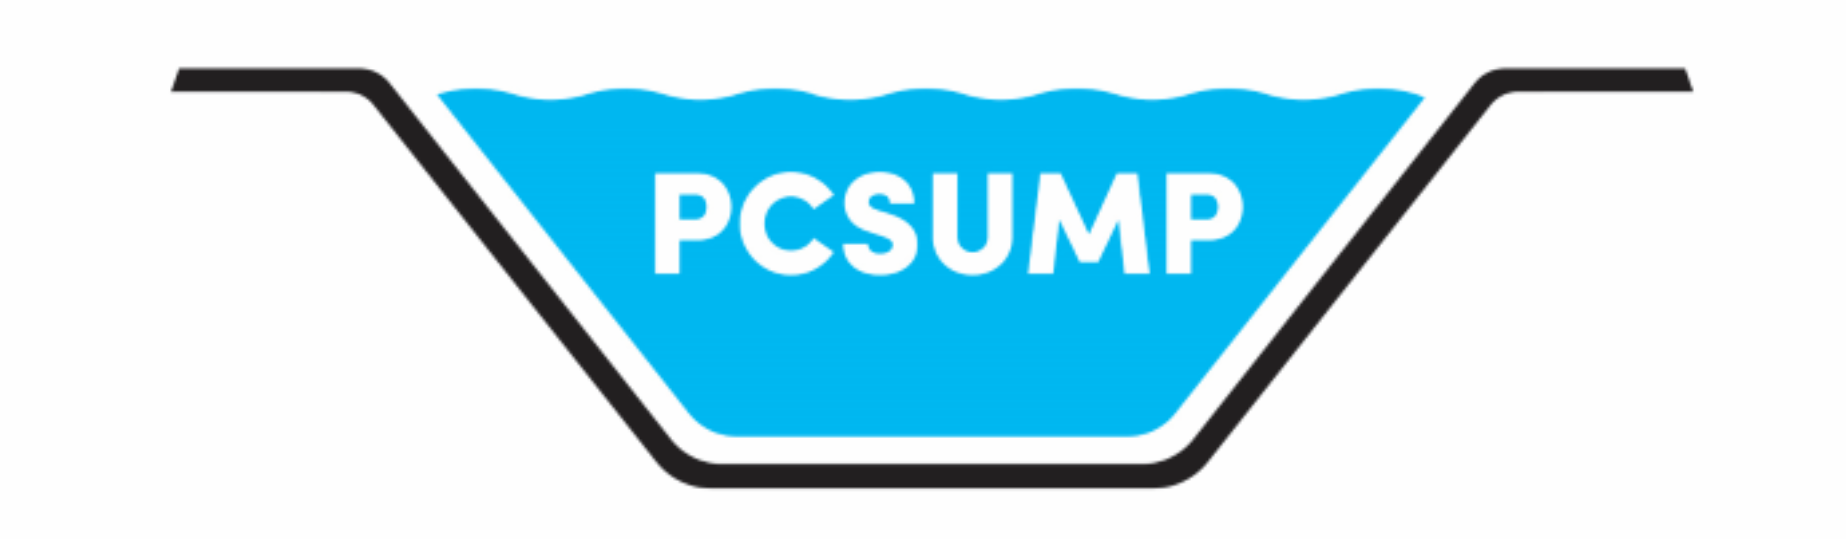 PC SUMP logo